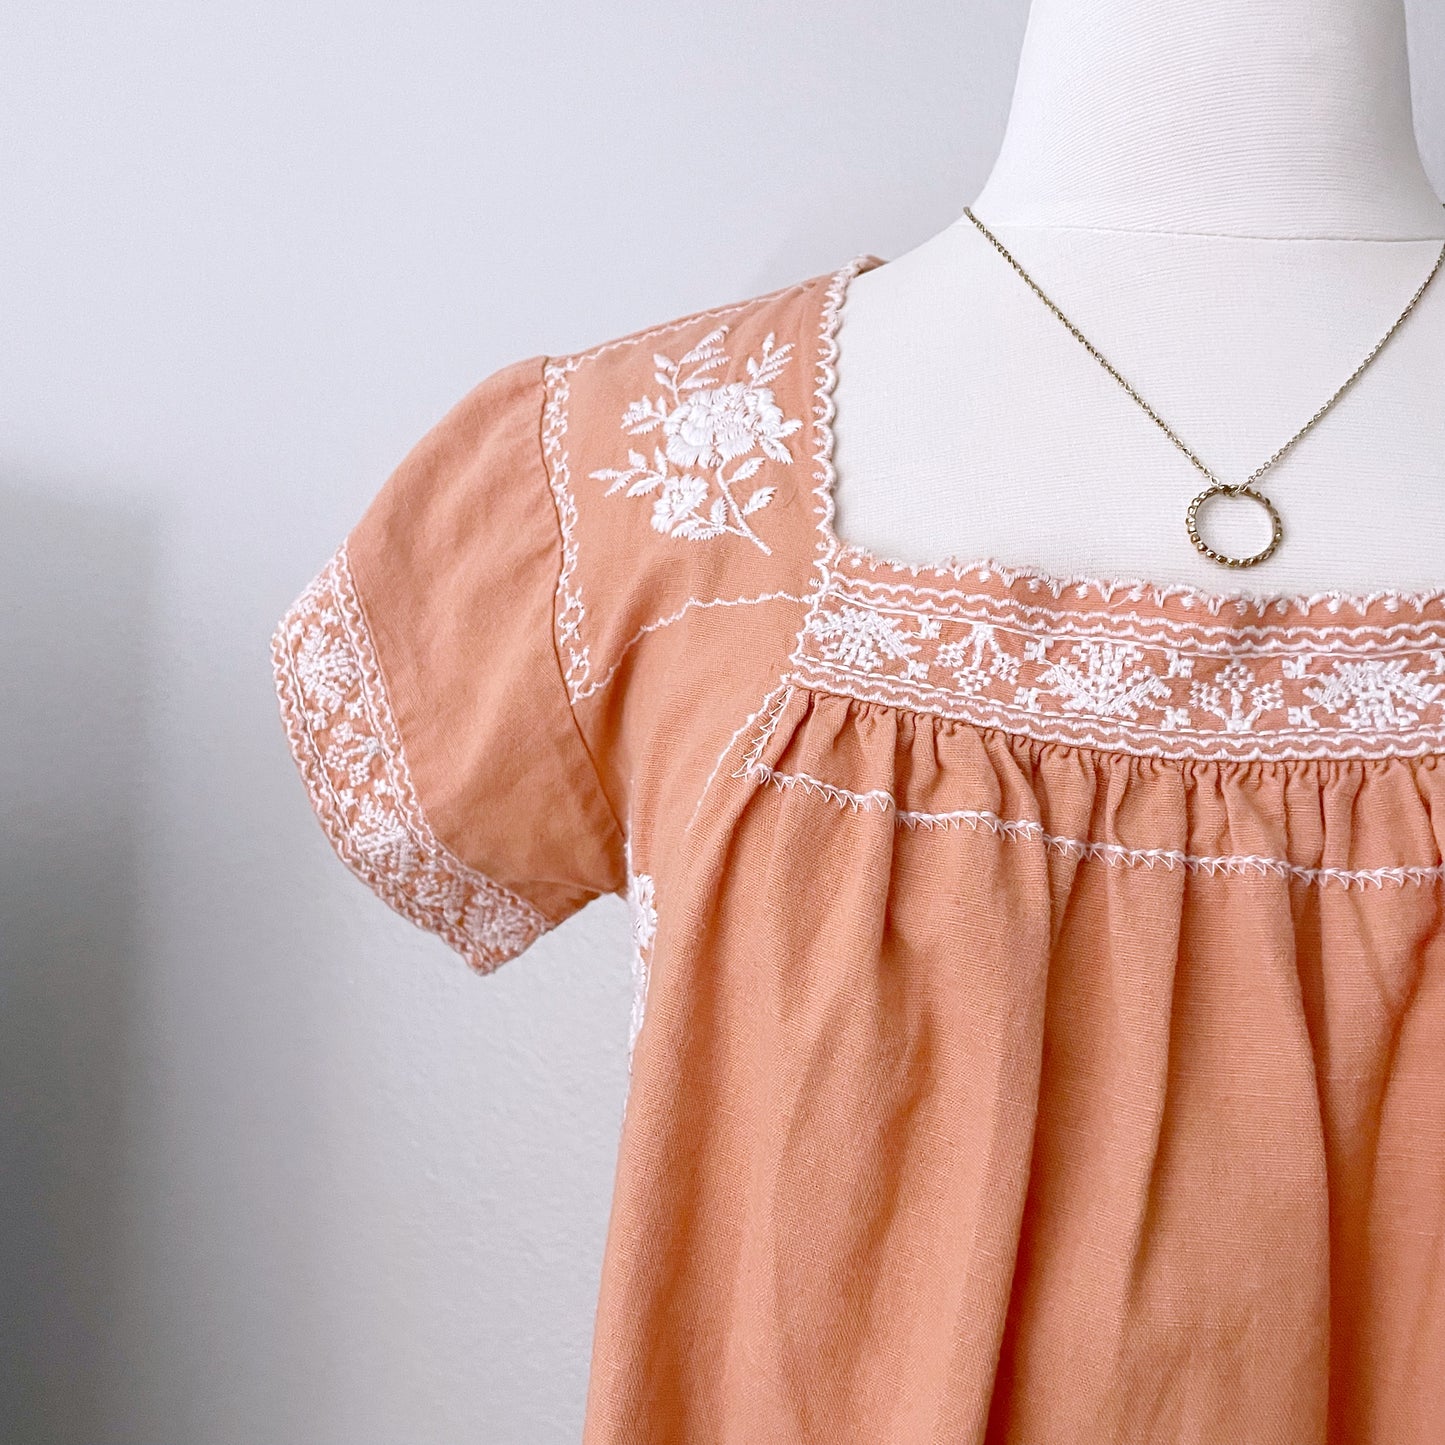 Embroidered Floral Orange Mini Dress (S)